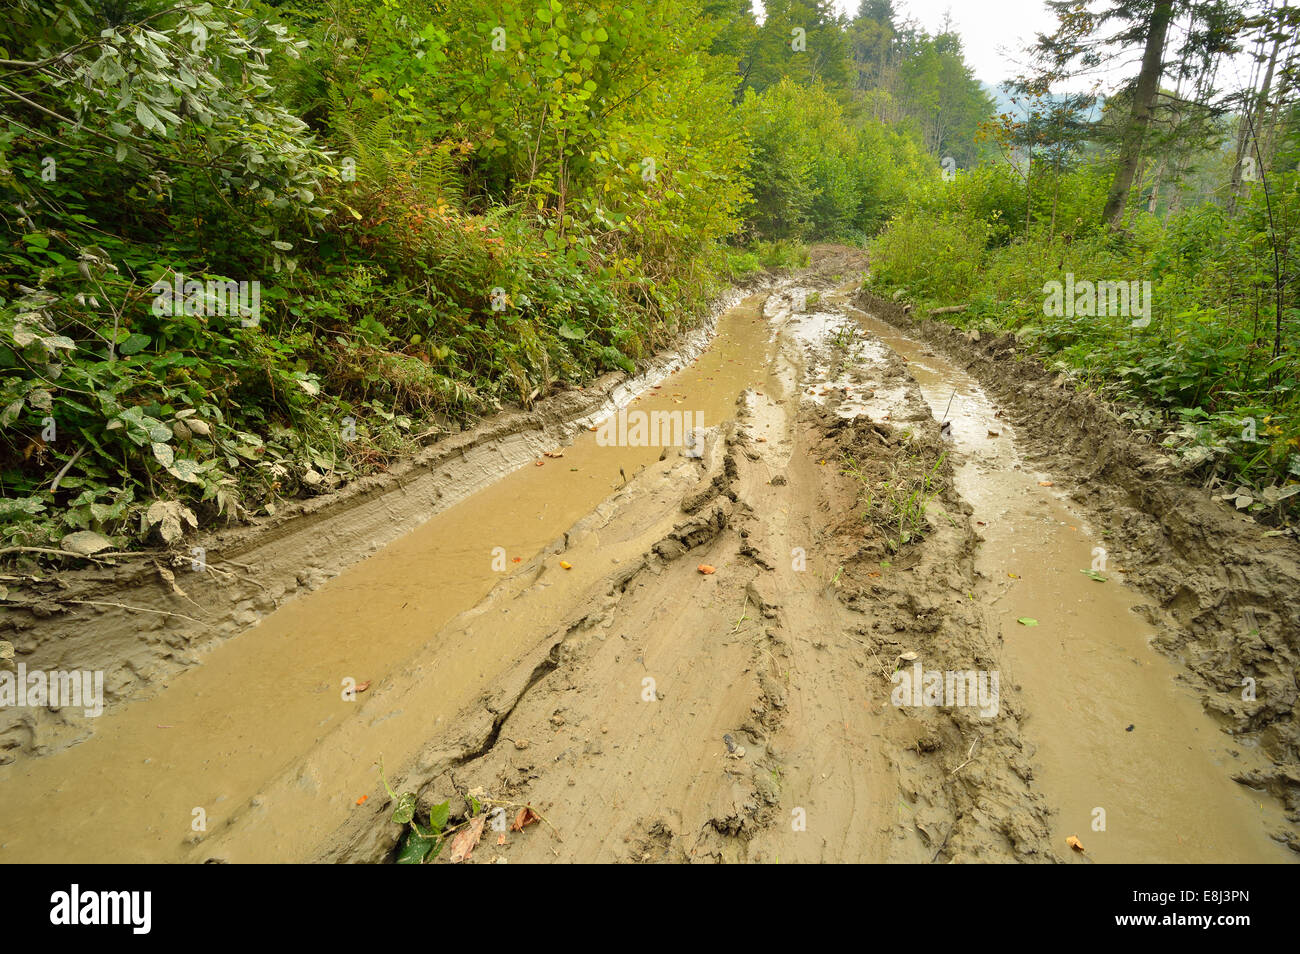 Extreme off road 4x4 muddy way through European forest. Poland. Stock Photo